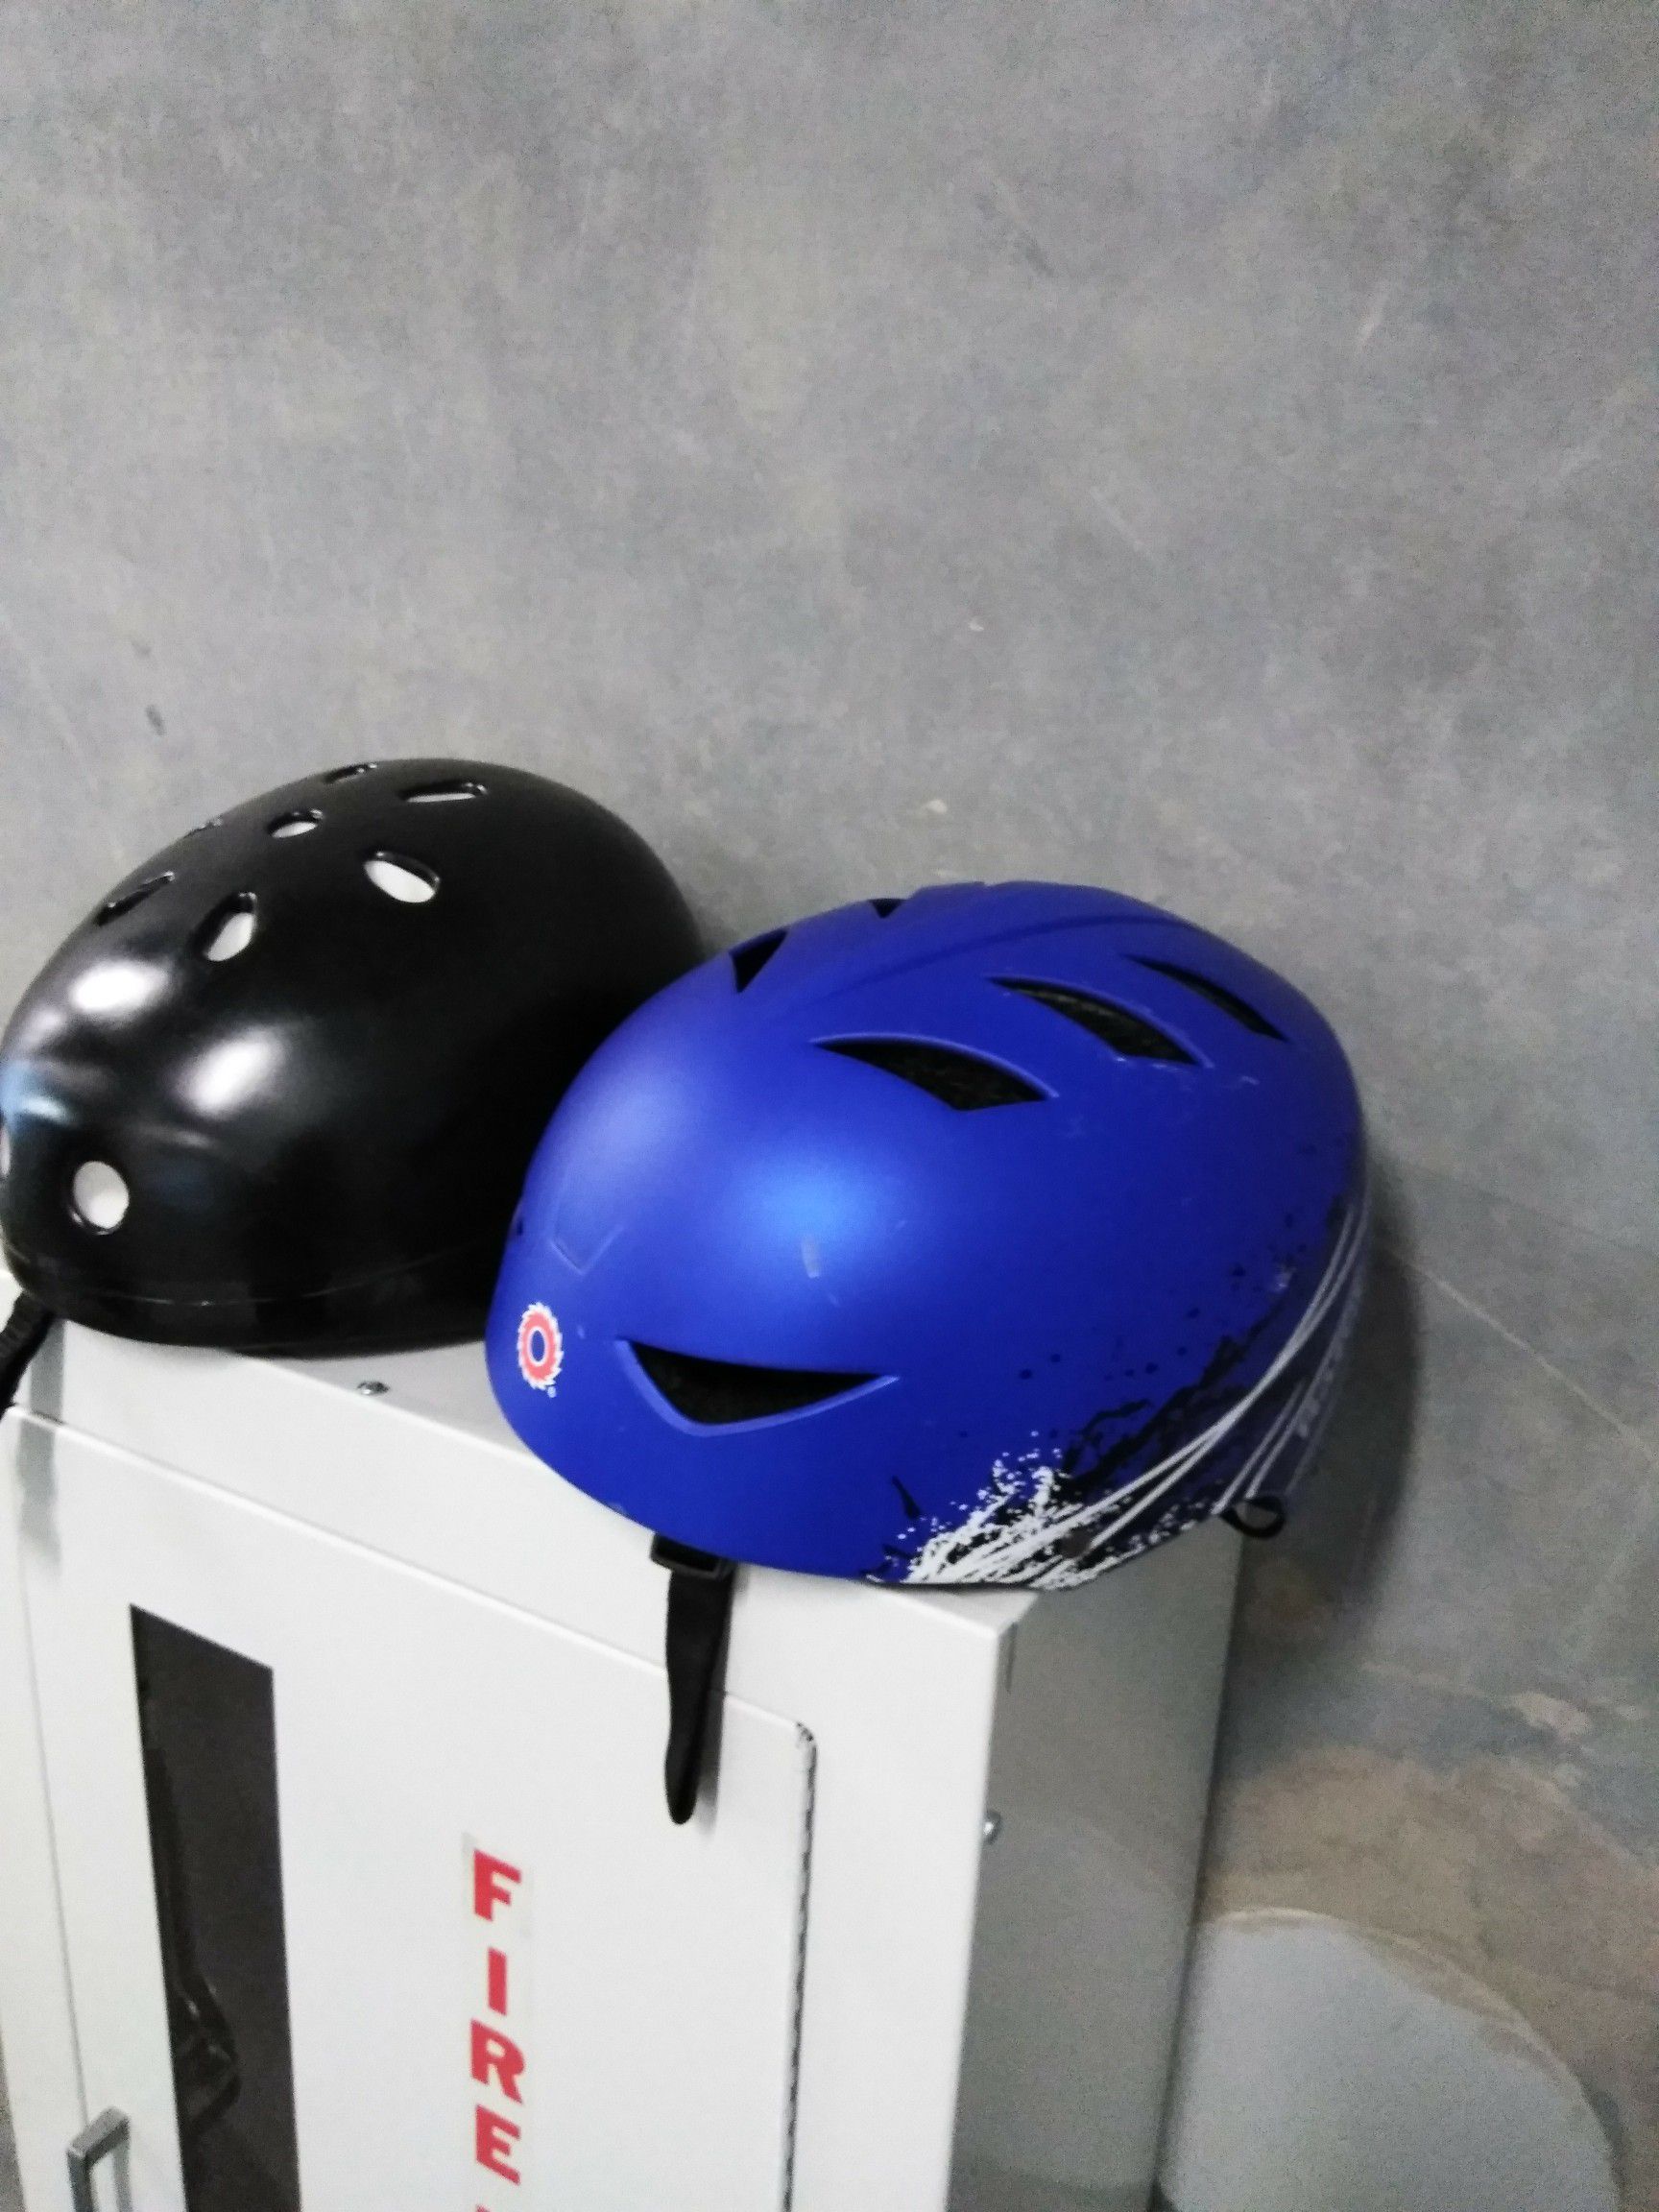 Razor boys helmets